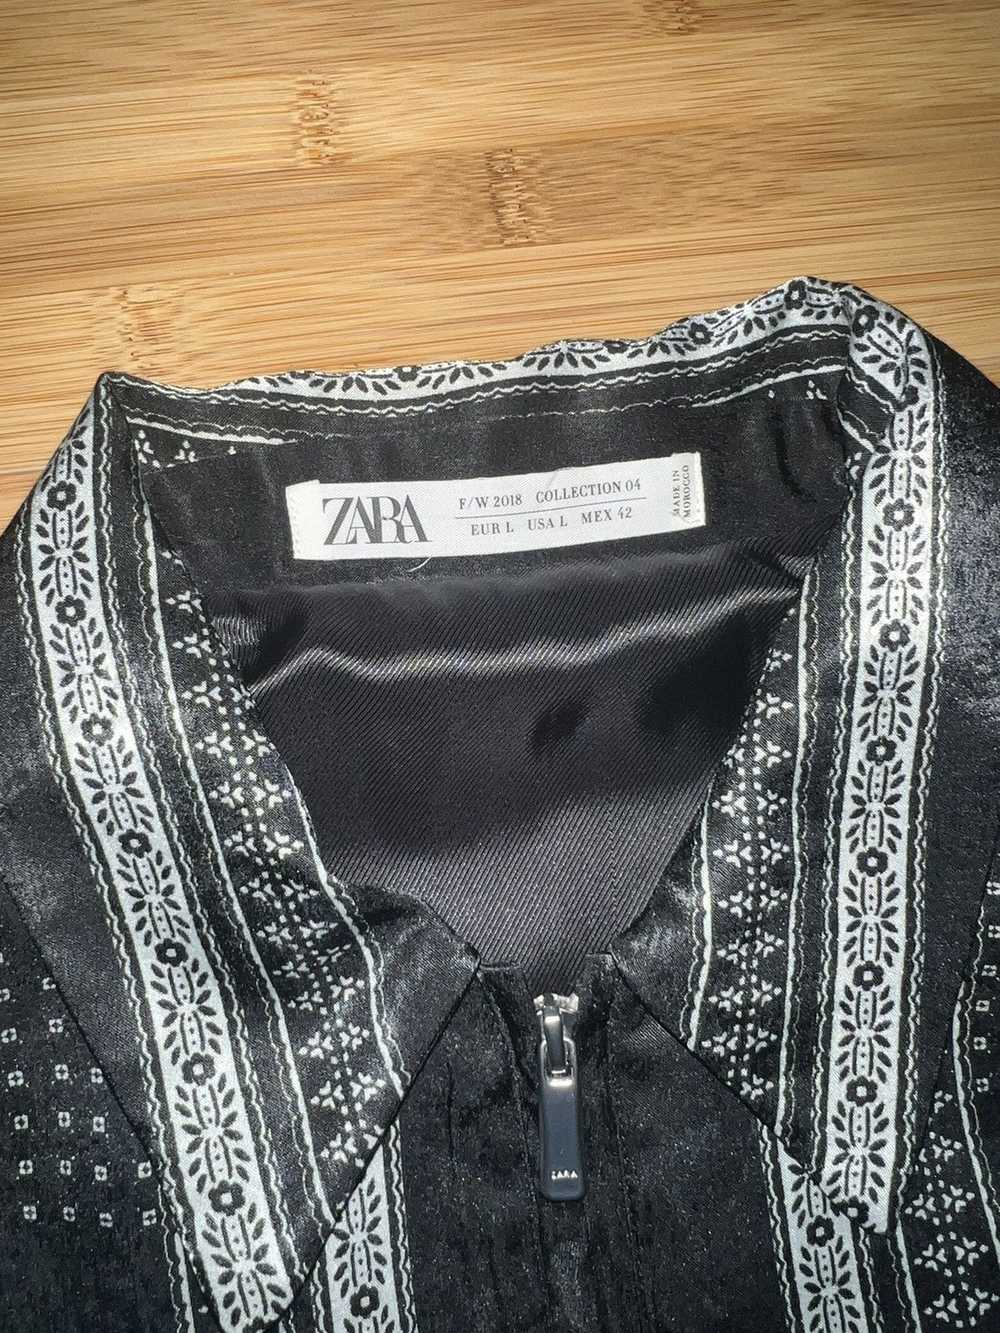 Zara Bandana Zip Up Jacket - image 4